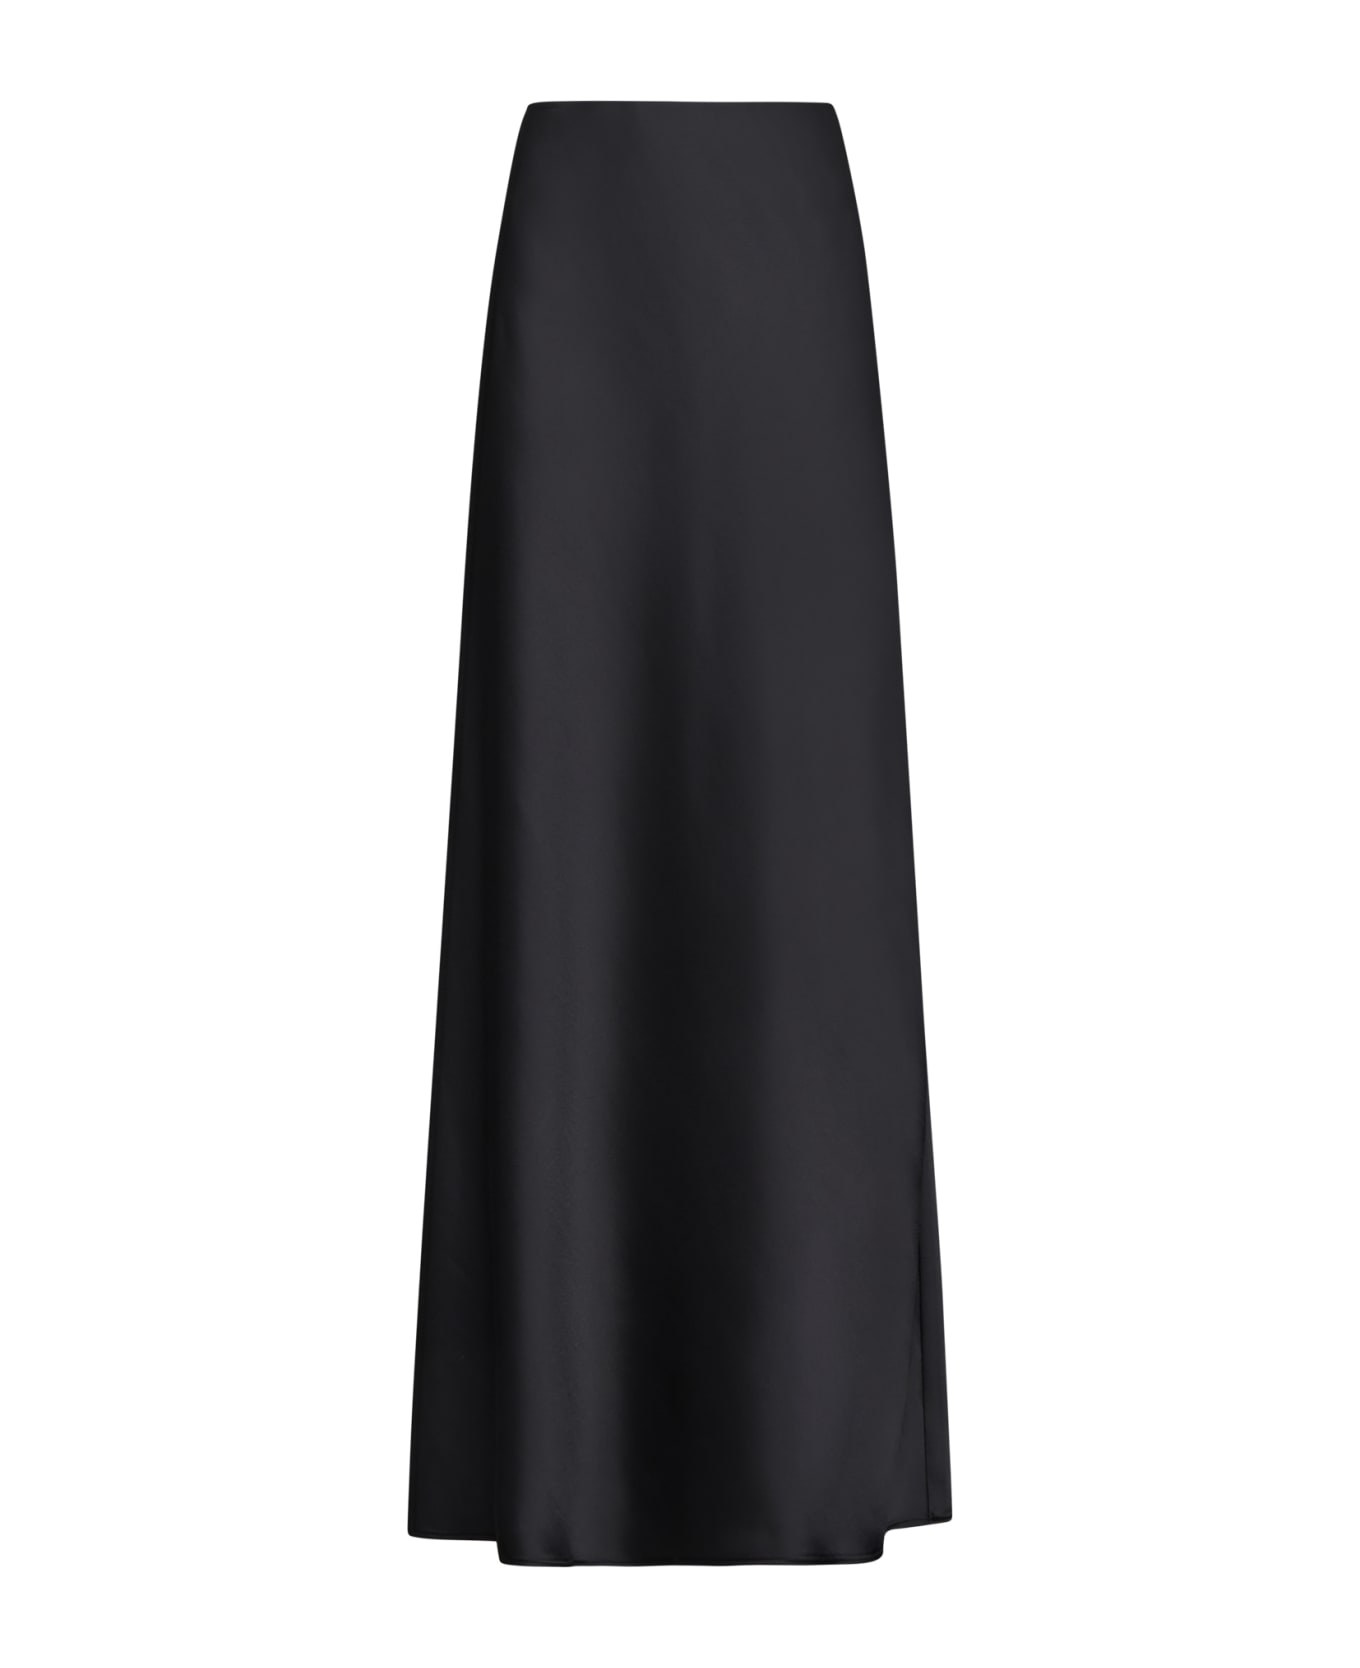 Blanca Vita Skirt - Onice スカート